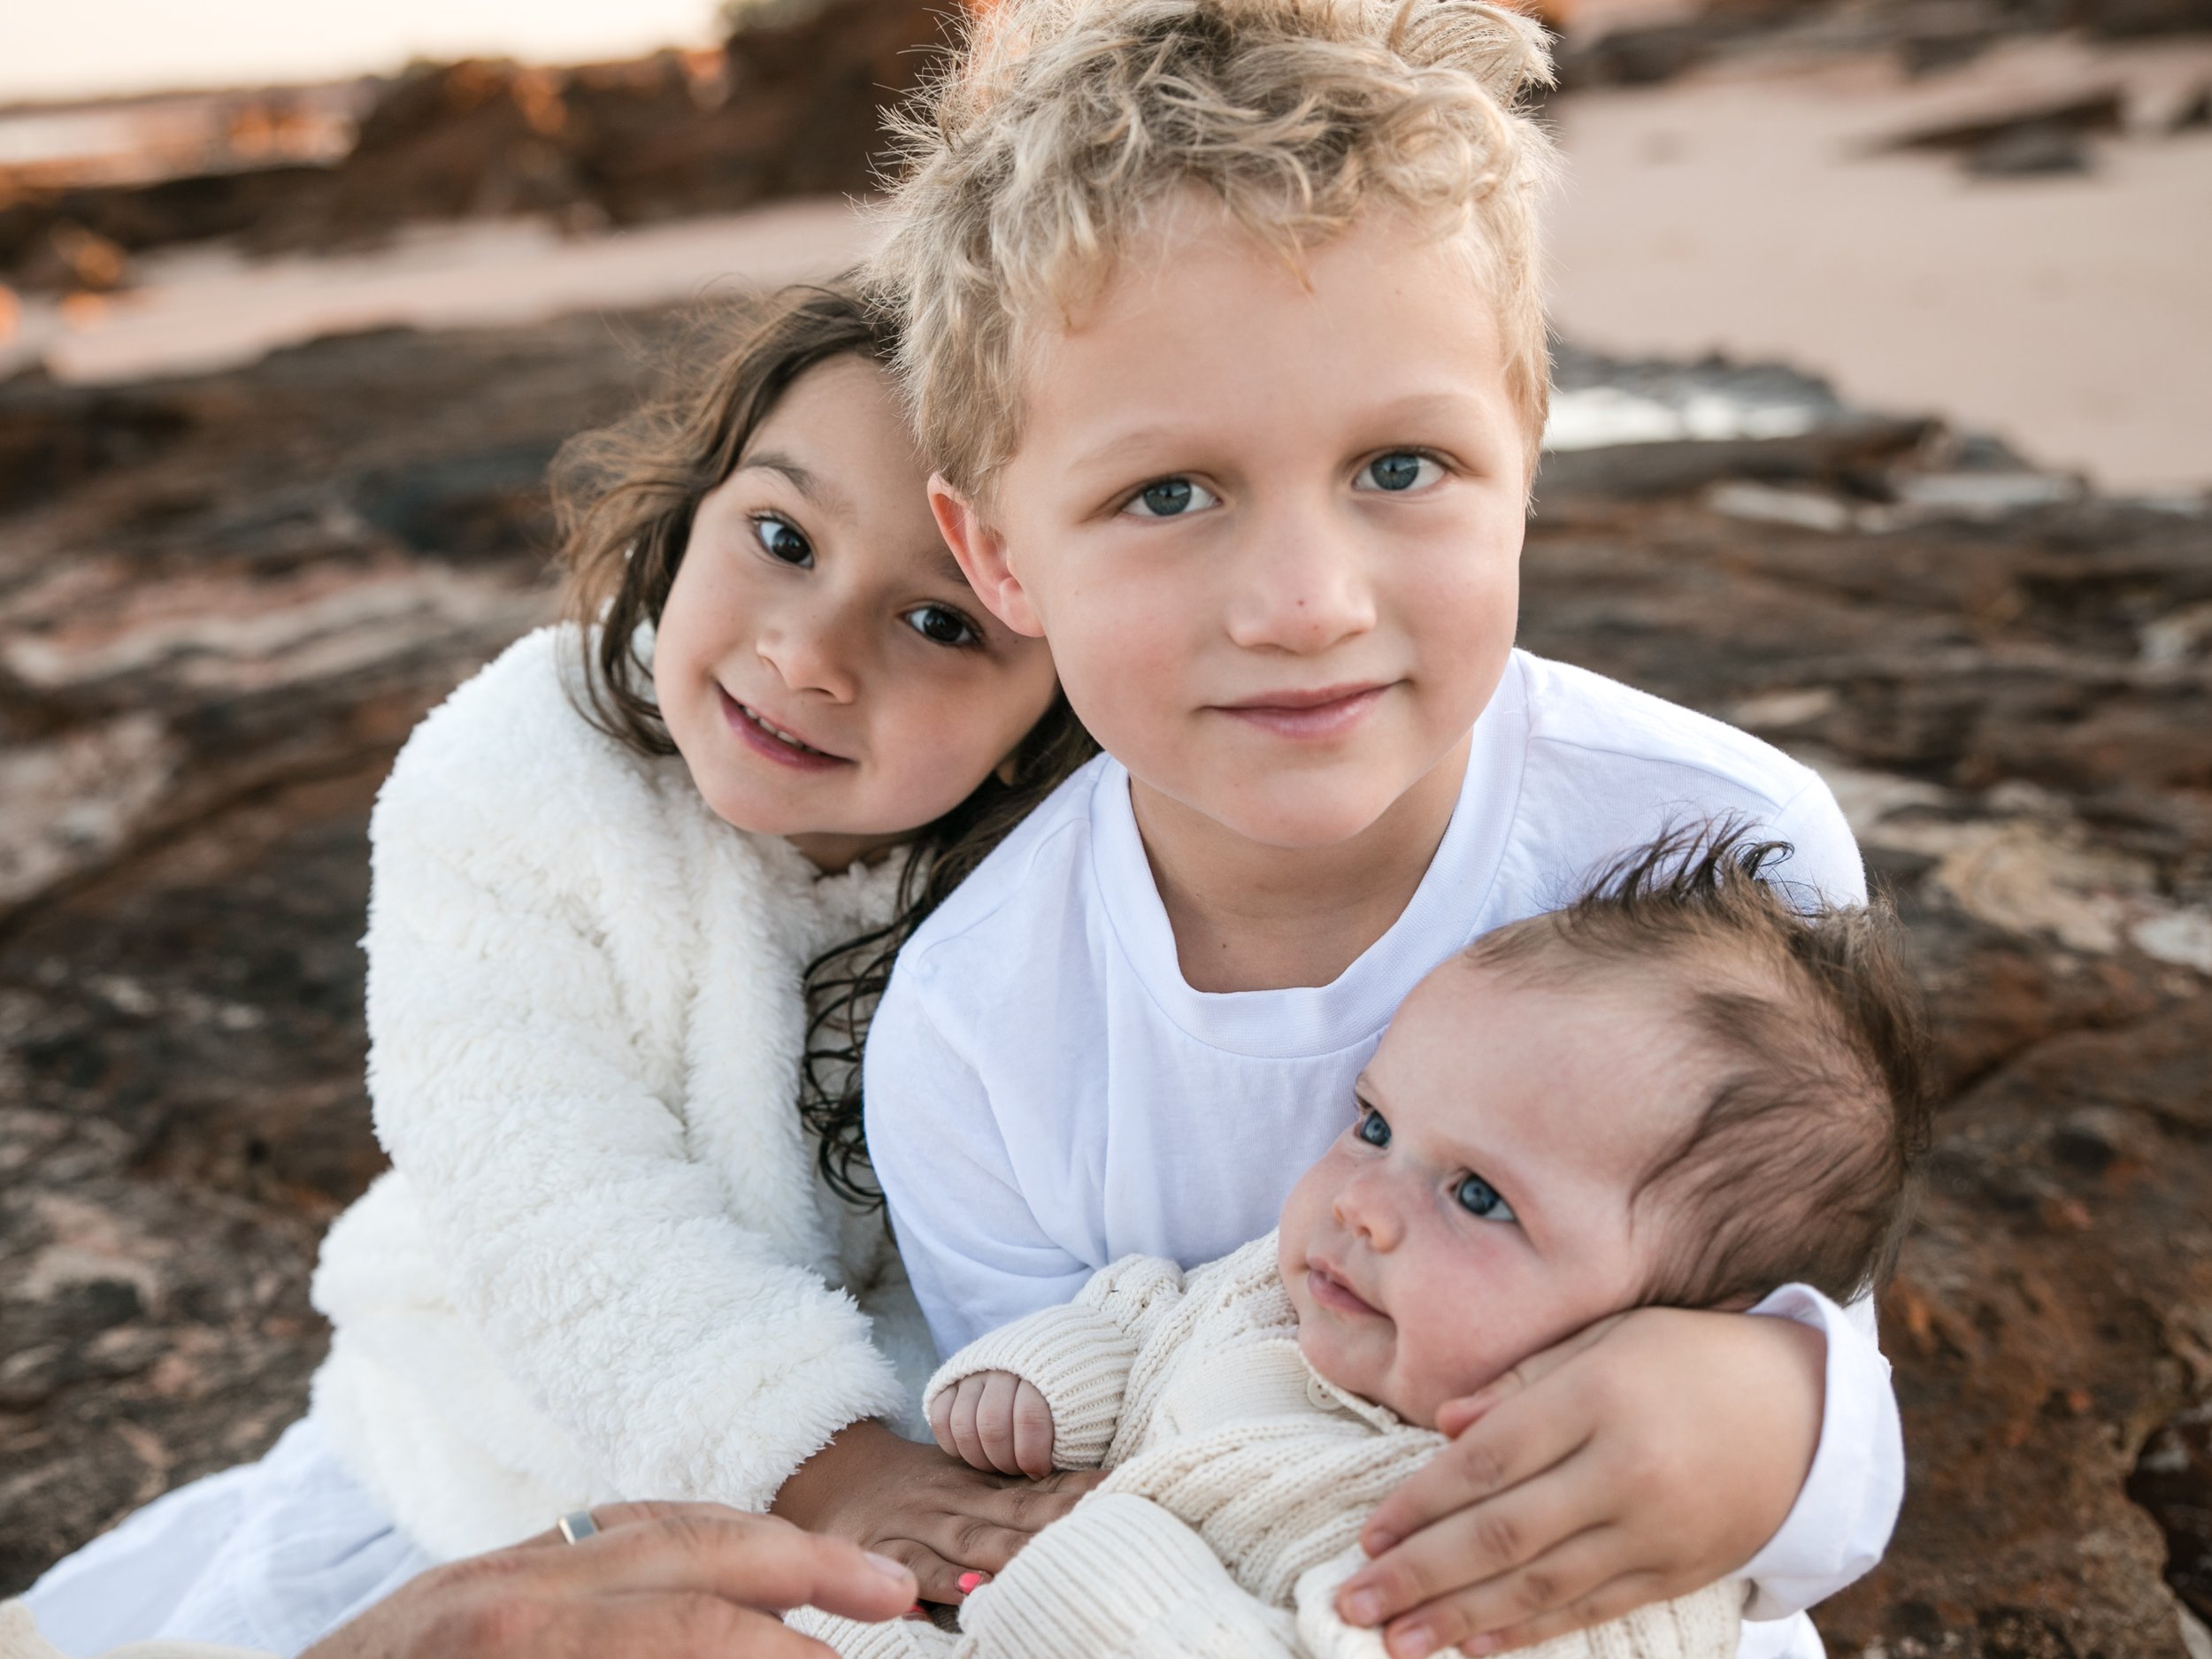 Broome Family Photography  - Yvonne Marianna Photography - Tiarna-26.jpg